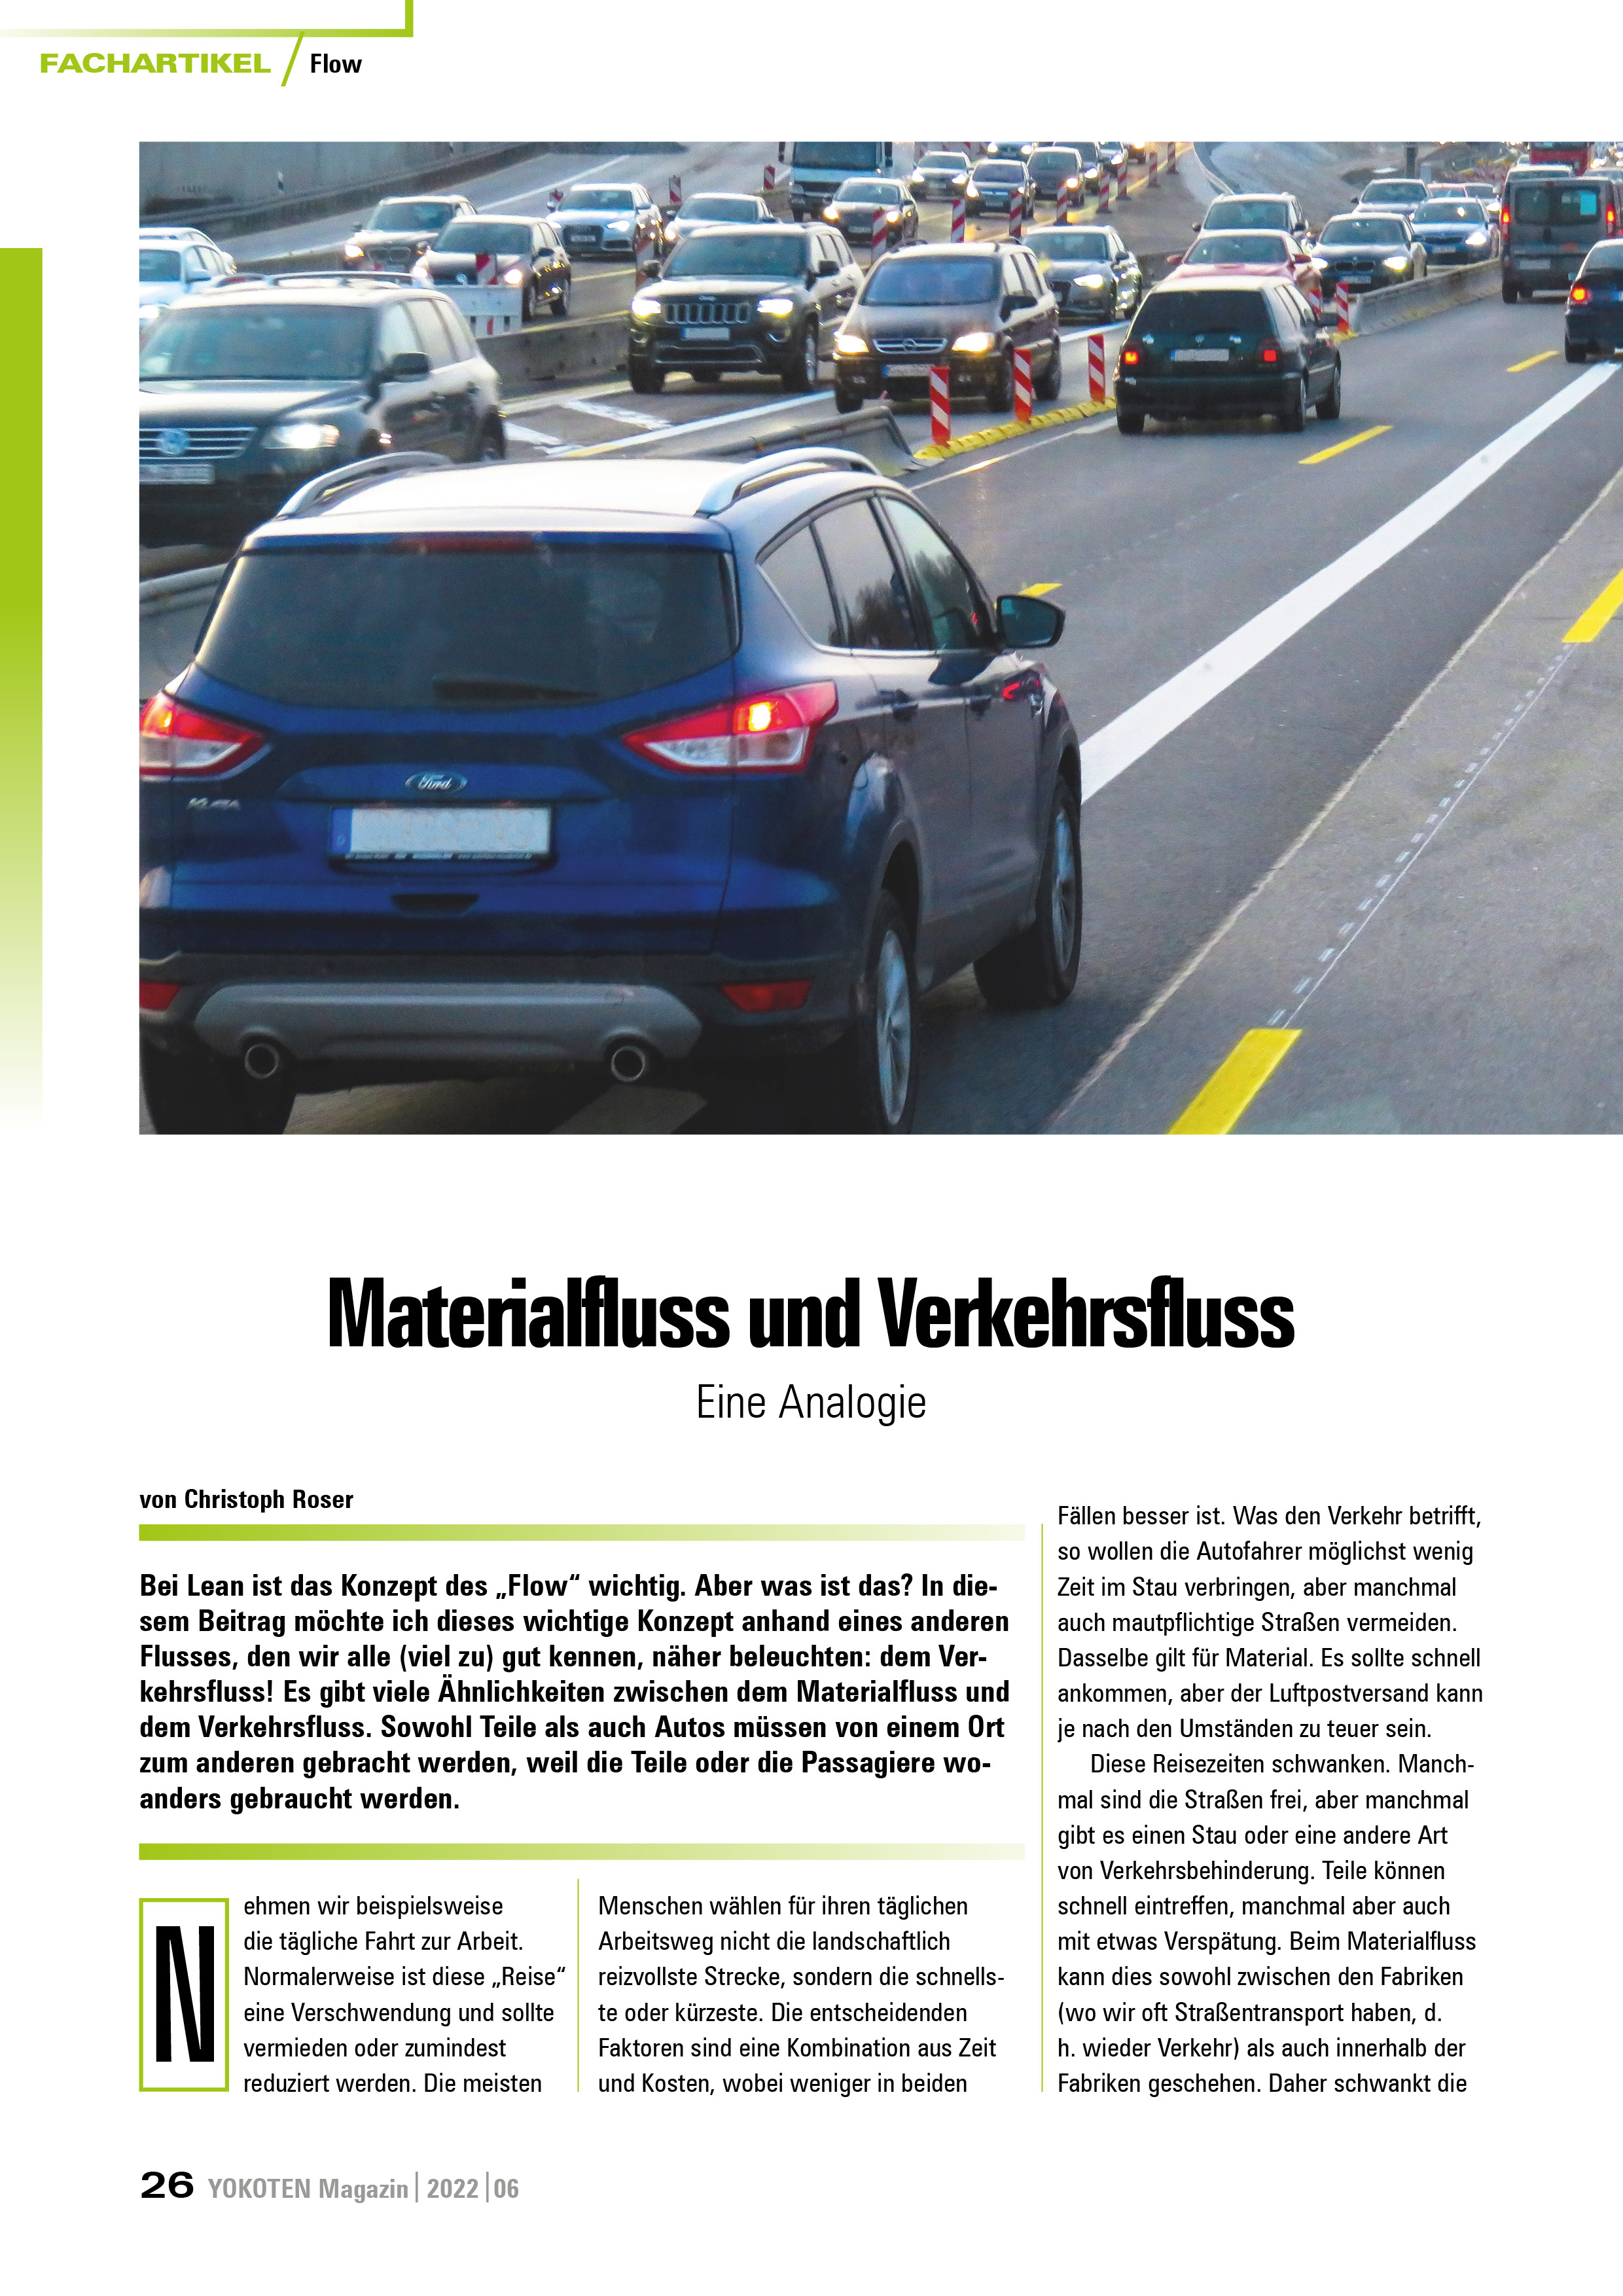 Materialfluss und Verkehrsfluss - Artikel aus Fachmagazin YOKOTEN 2022-06